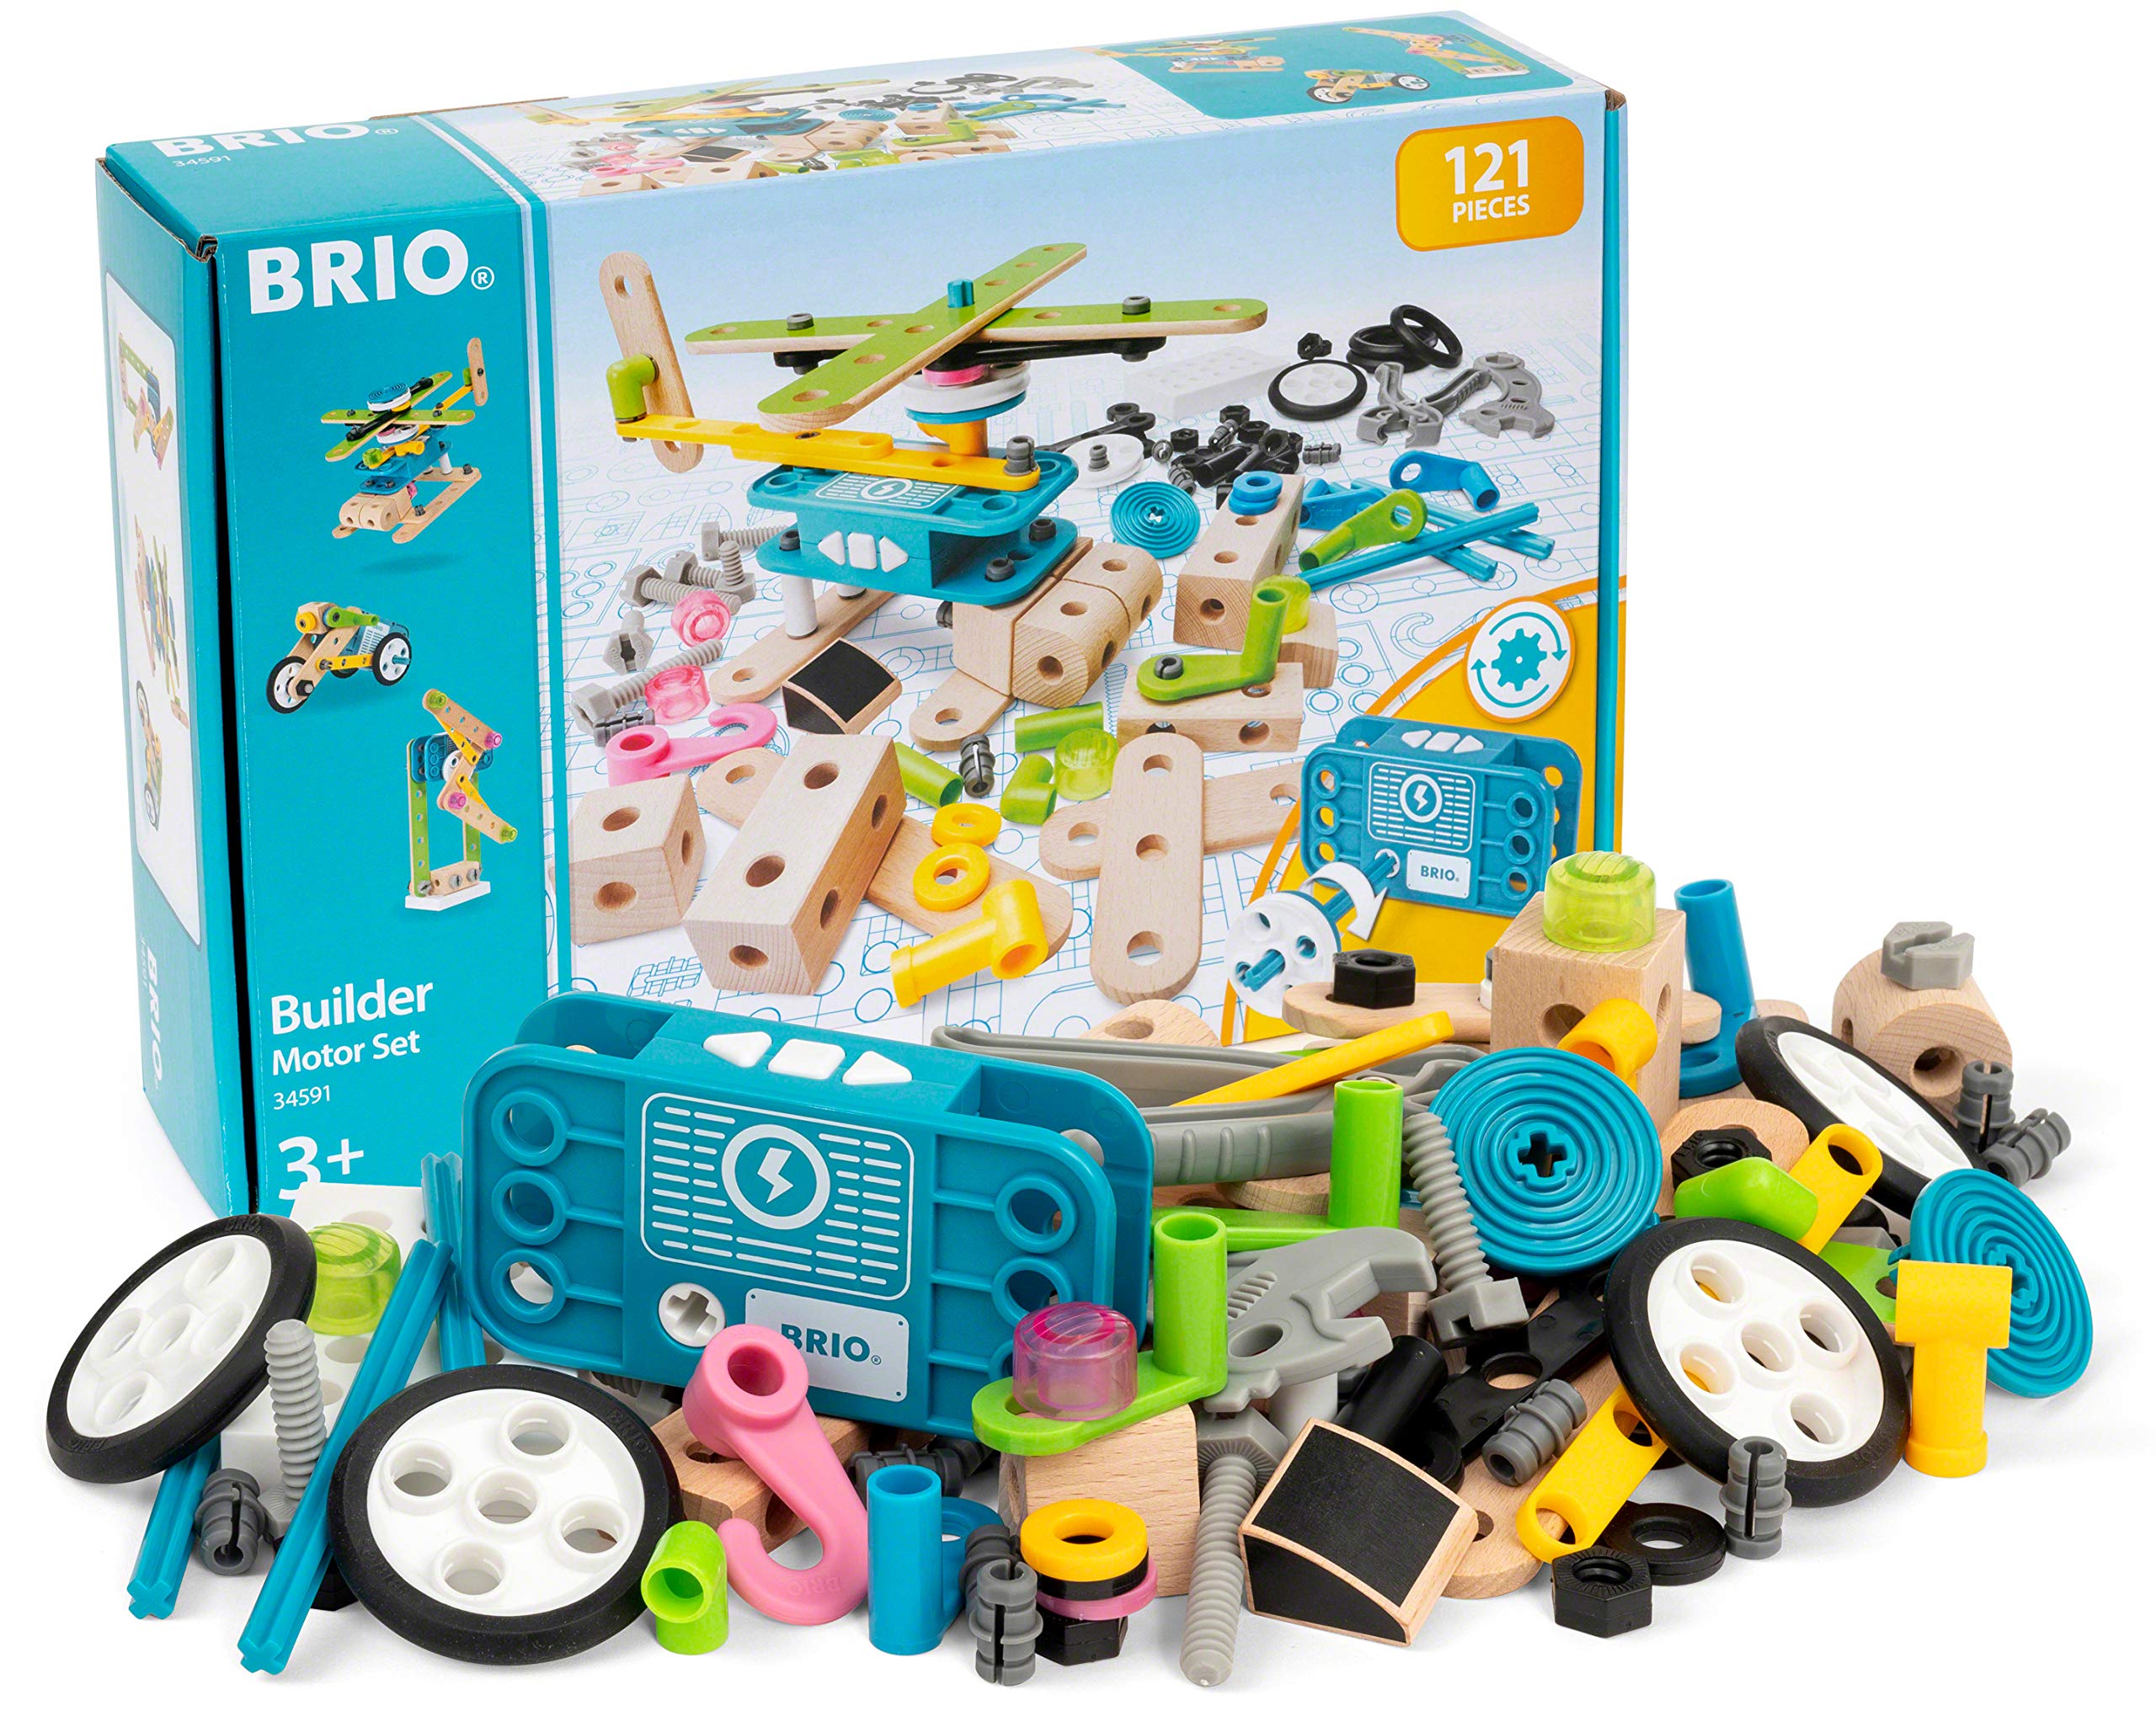 BRIO ( ブリオ ) ビルダー モーターセット [全121ピース] 対象年齢 3歳~ ( 組み立て おもちゃ 積み木 知育玩具 木製 ) 3459